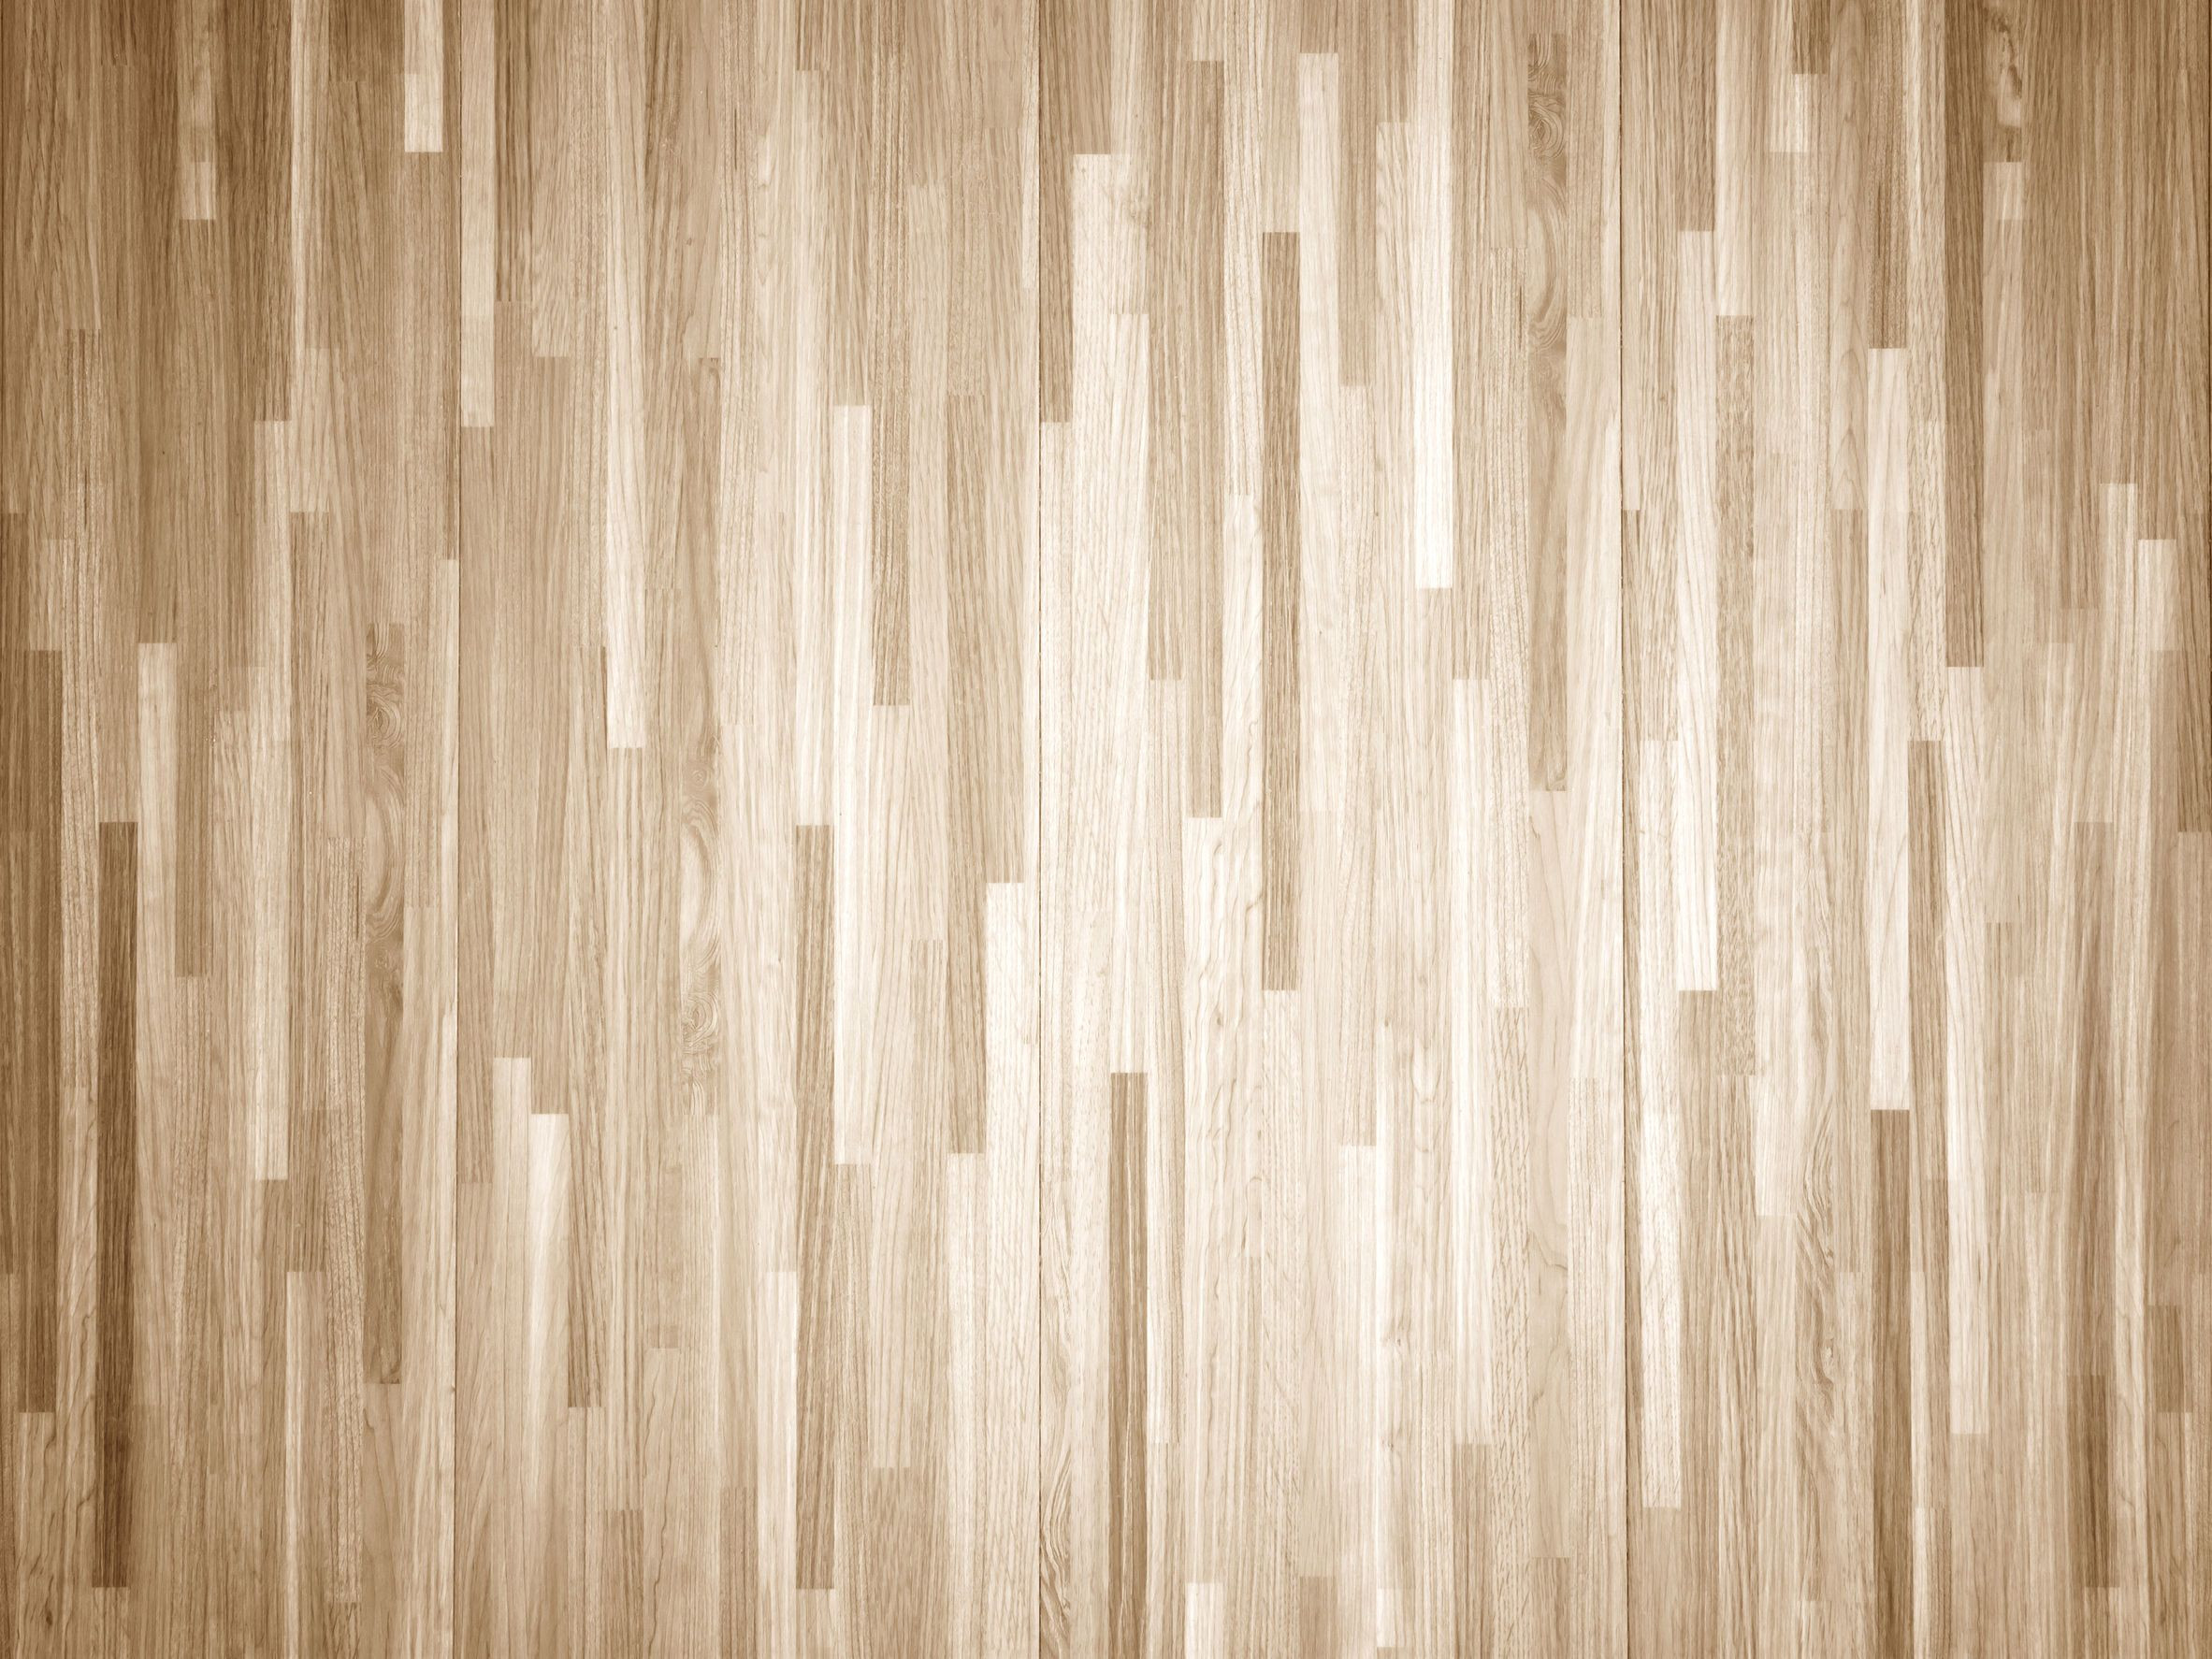 14 Spectacular Hardwood Floor Buffer Cleaner 2024 free download hardwood floor buffer cleaner of how to chemically strip wood floors woodfloordoctor com regarding you